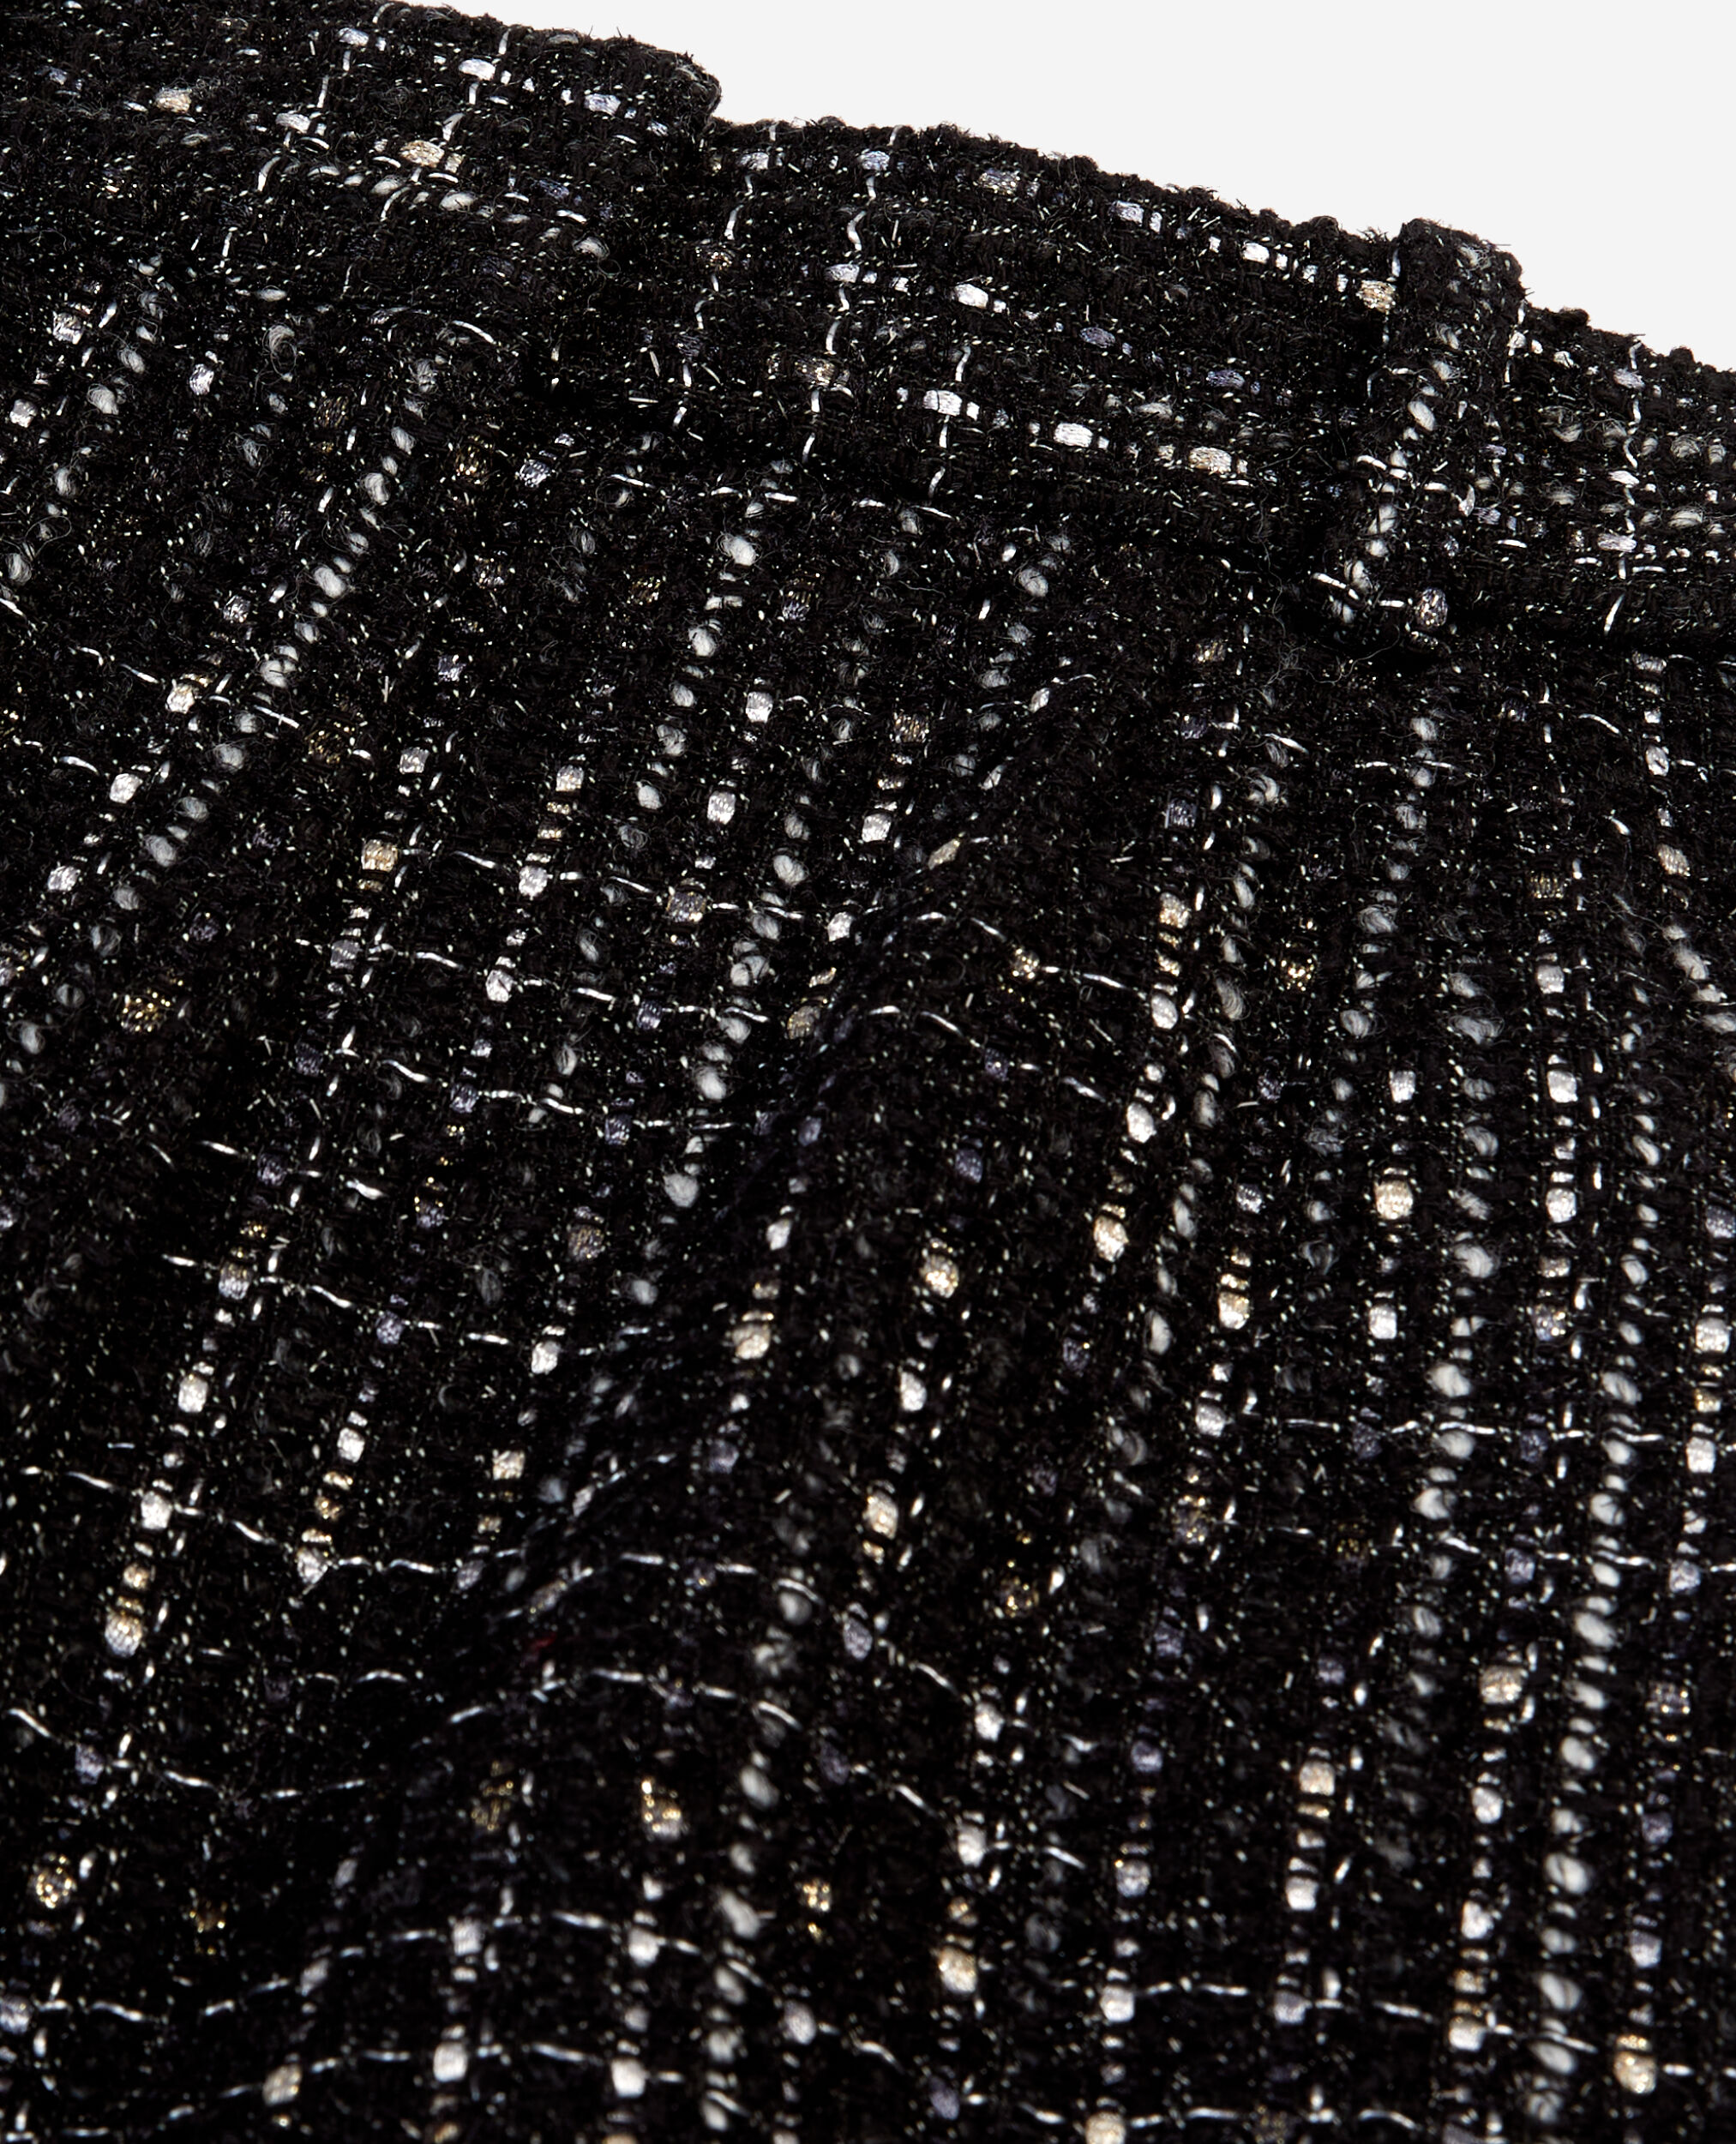 Schwarz-weiße Shorts aus Tweed, BLACK WHITE, hi-res image number null